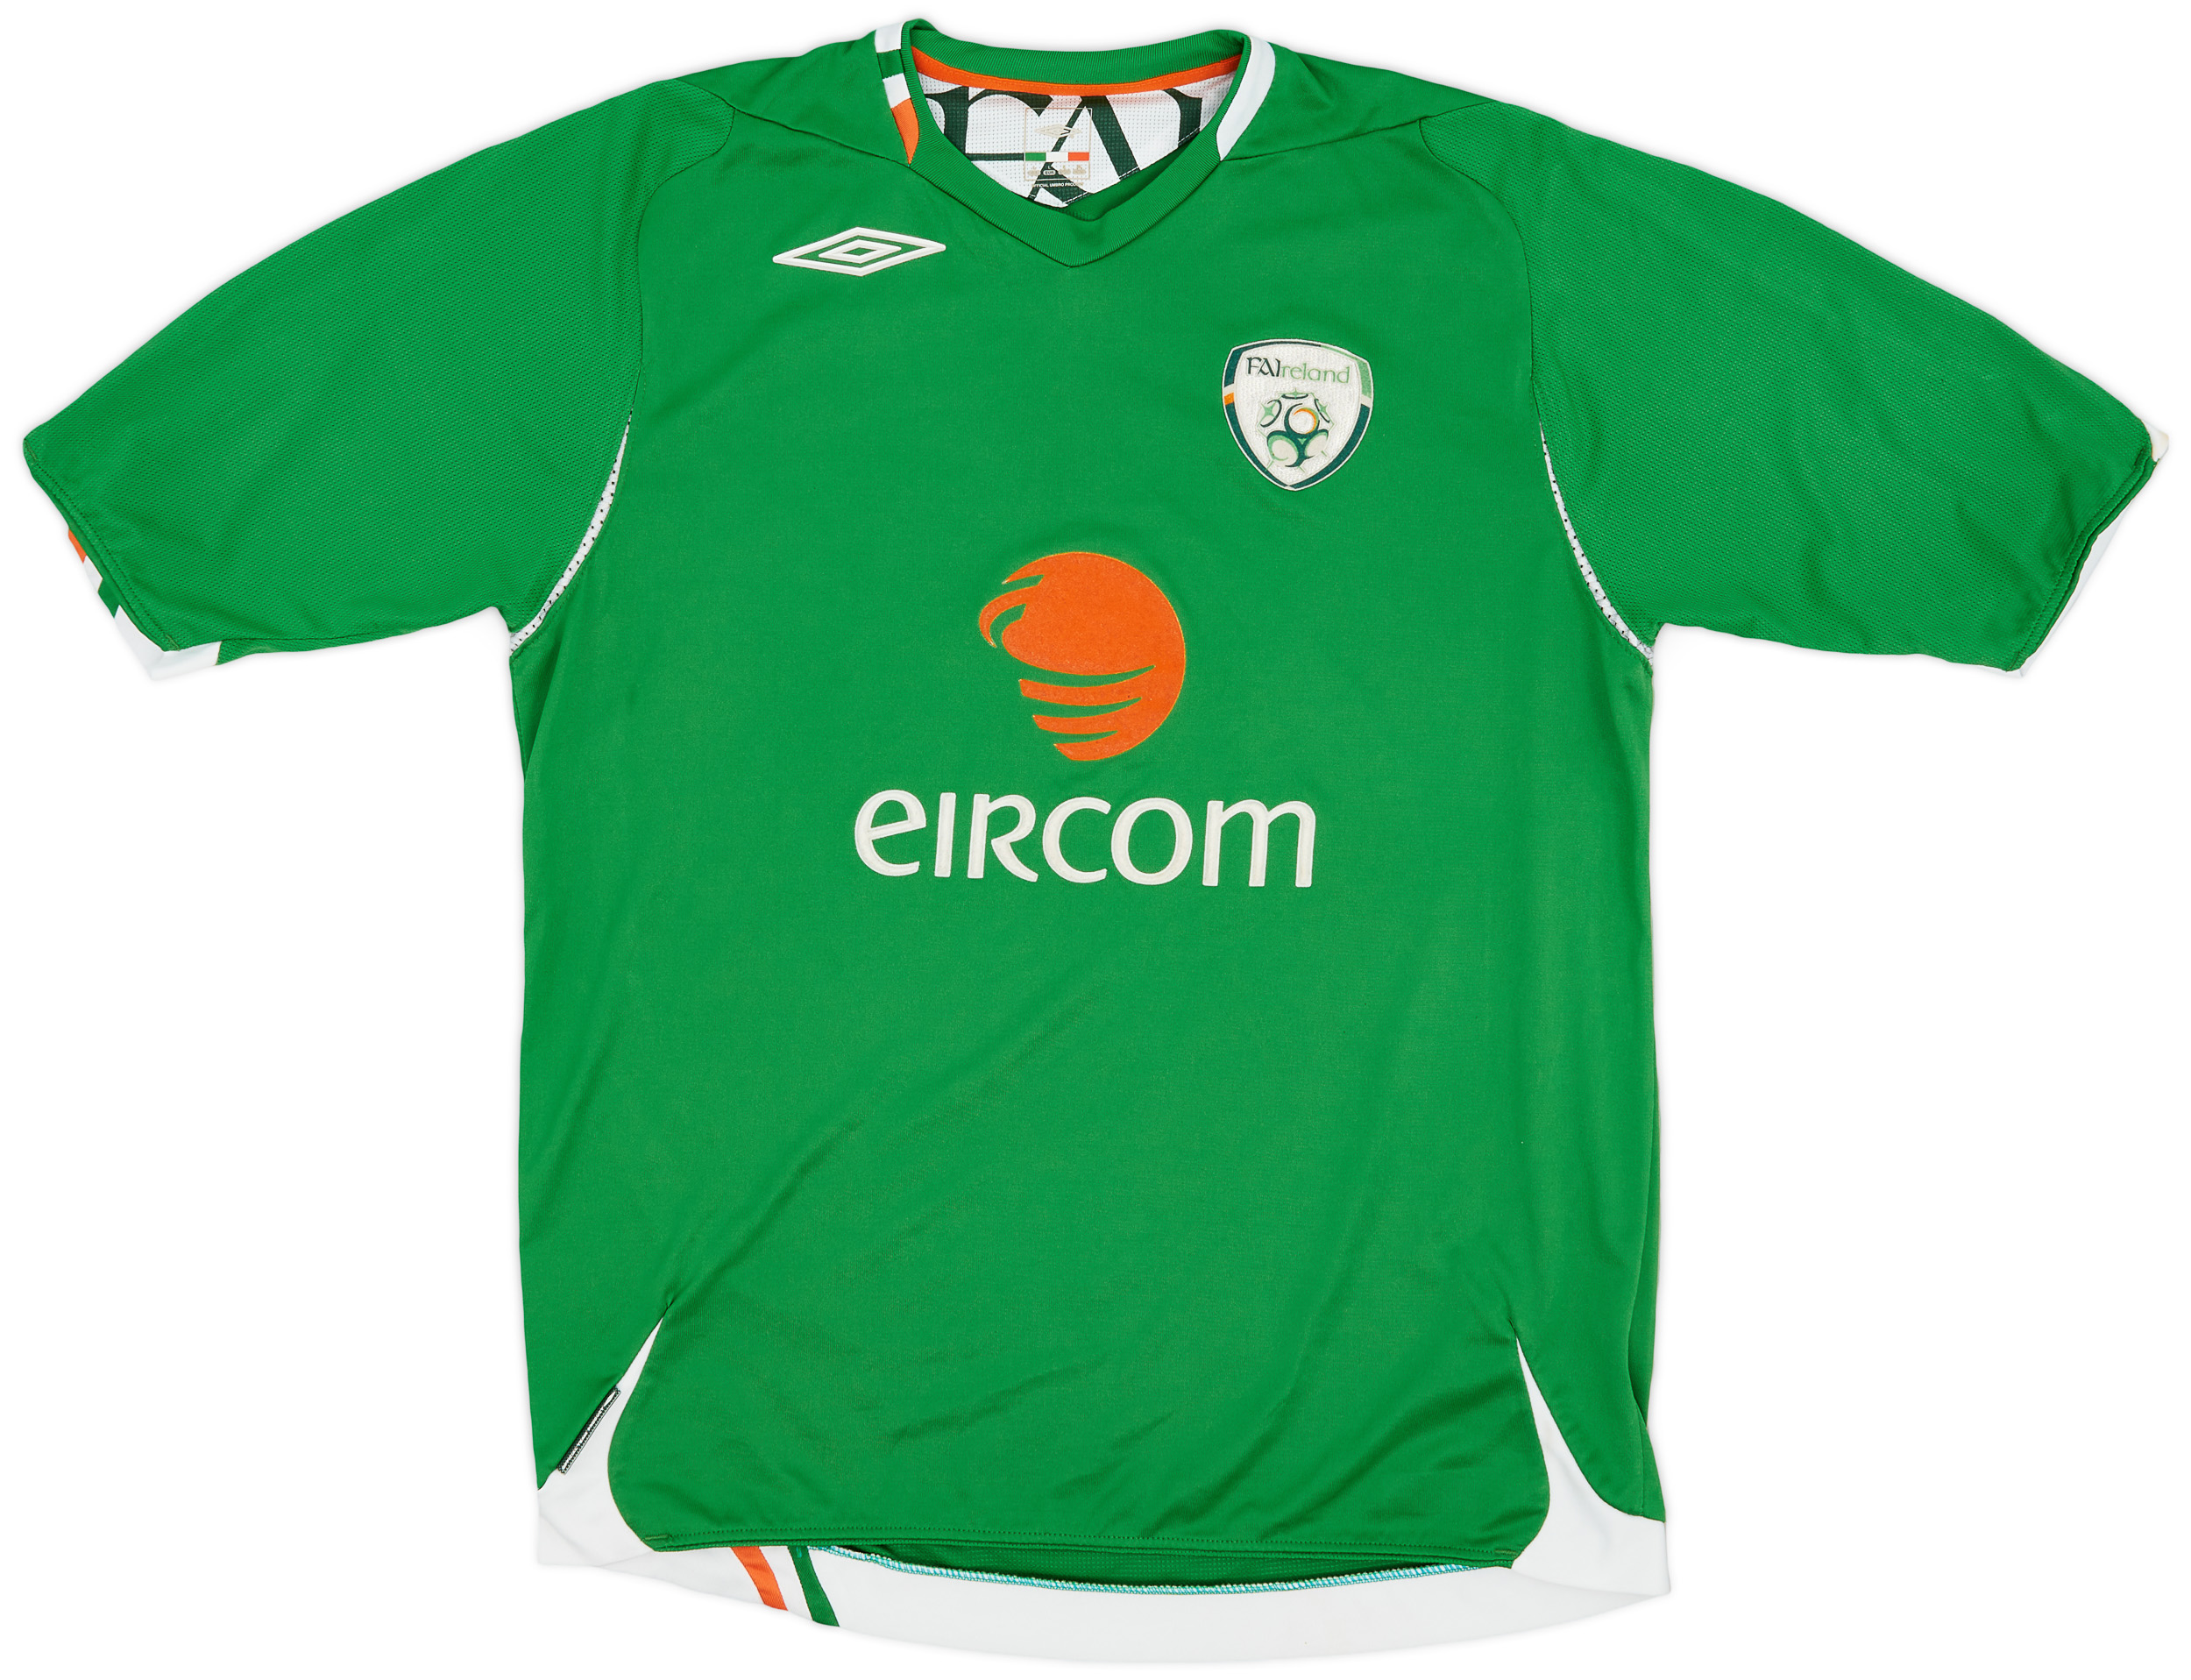 Republic of Ireland  home baju (Original)